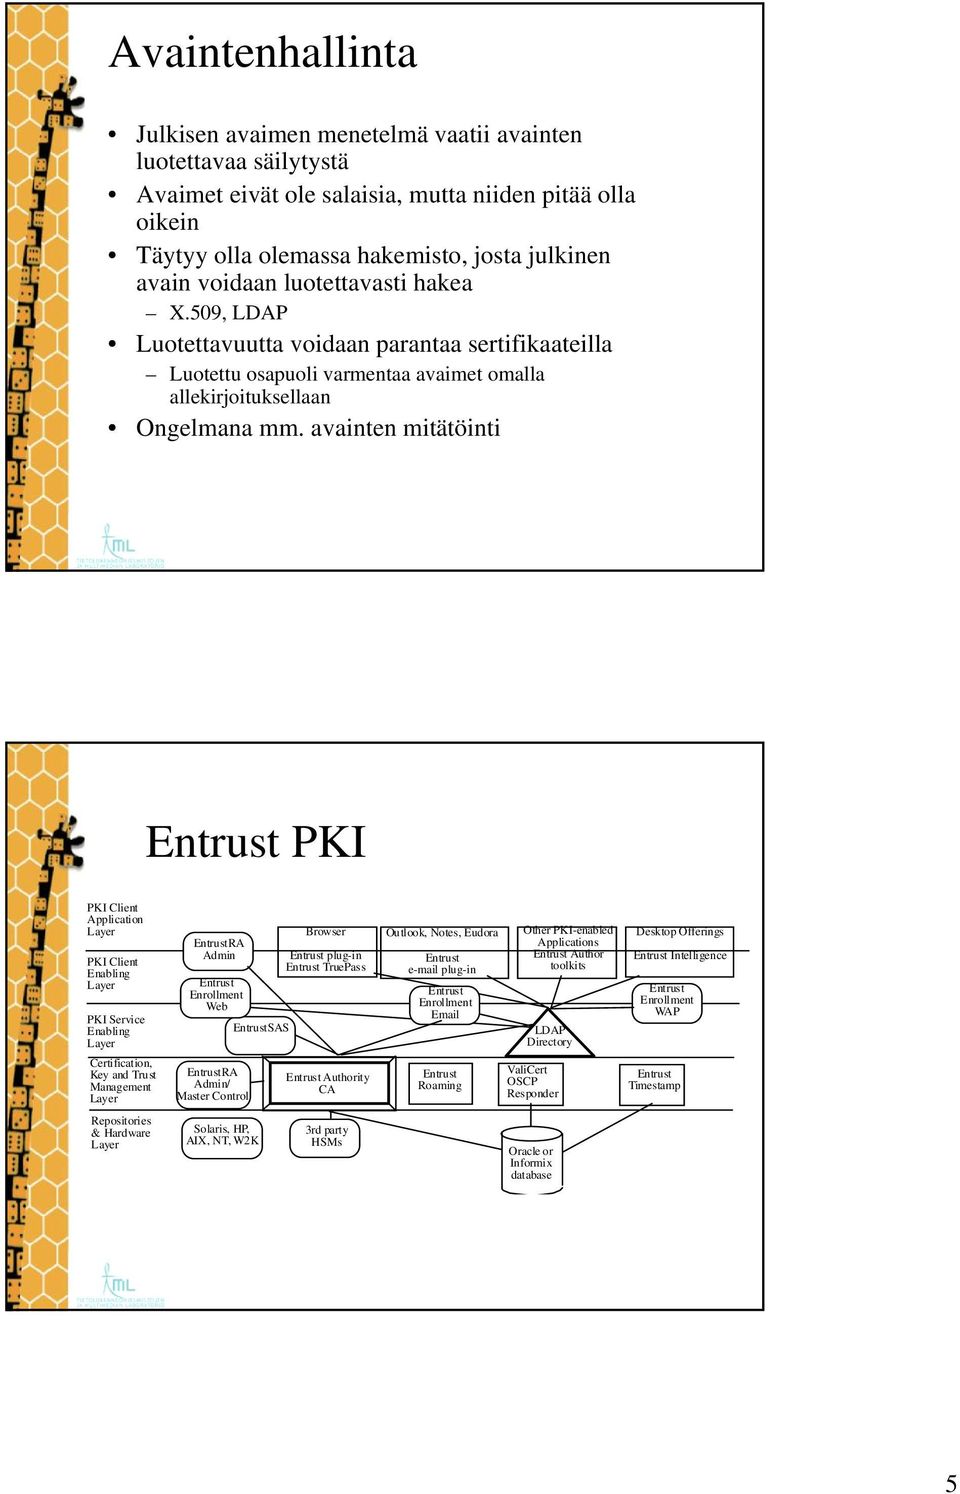 avainten mitätöinti Entrust PKI PKI Client Application Layer PKI Client Enabling Layer PKI Service Enabling Layer Certification, Key and Trust Management Layer Browser EntrustRA Admin Entrust plug-in